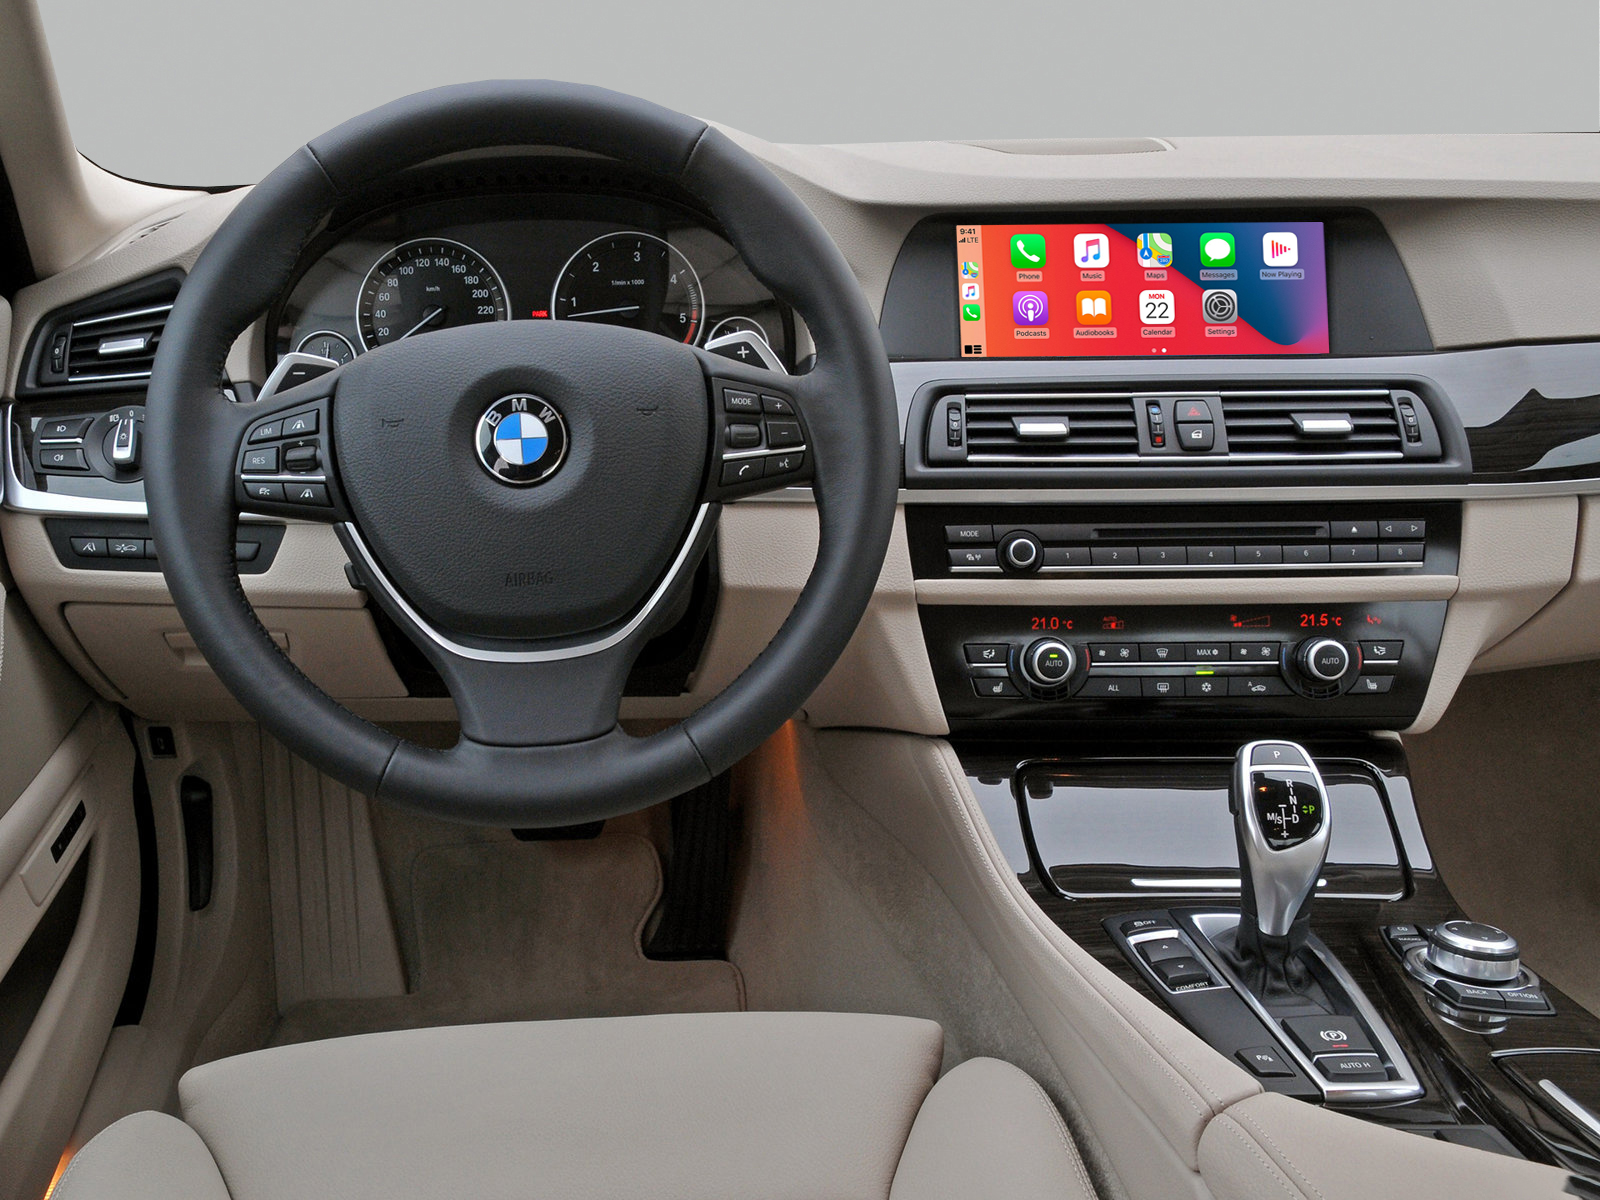 Autoradio AWESAFE Android pour BMW Série 5, F10 F11 [2011-2012] Carplay  Android Auto - Autoradio - Achat & prix